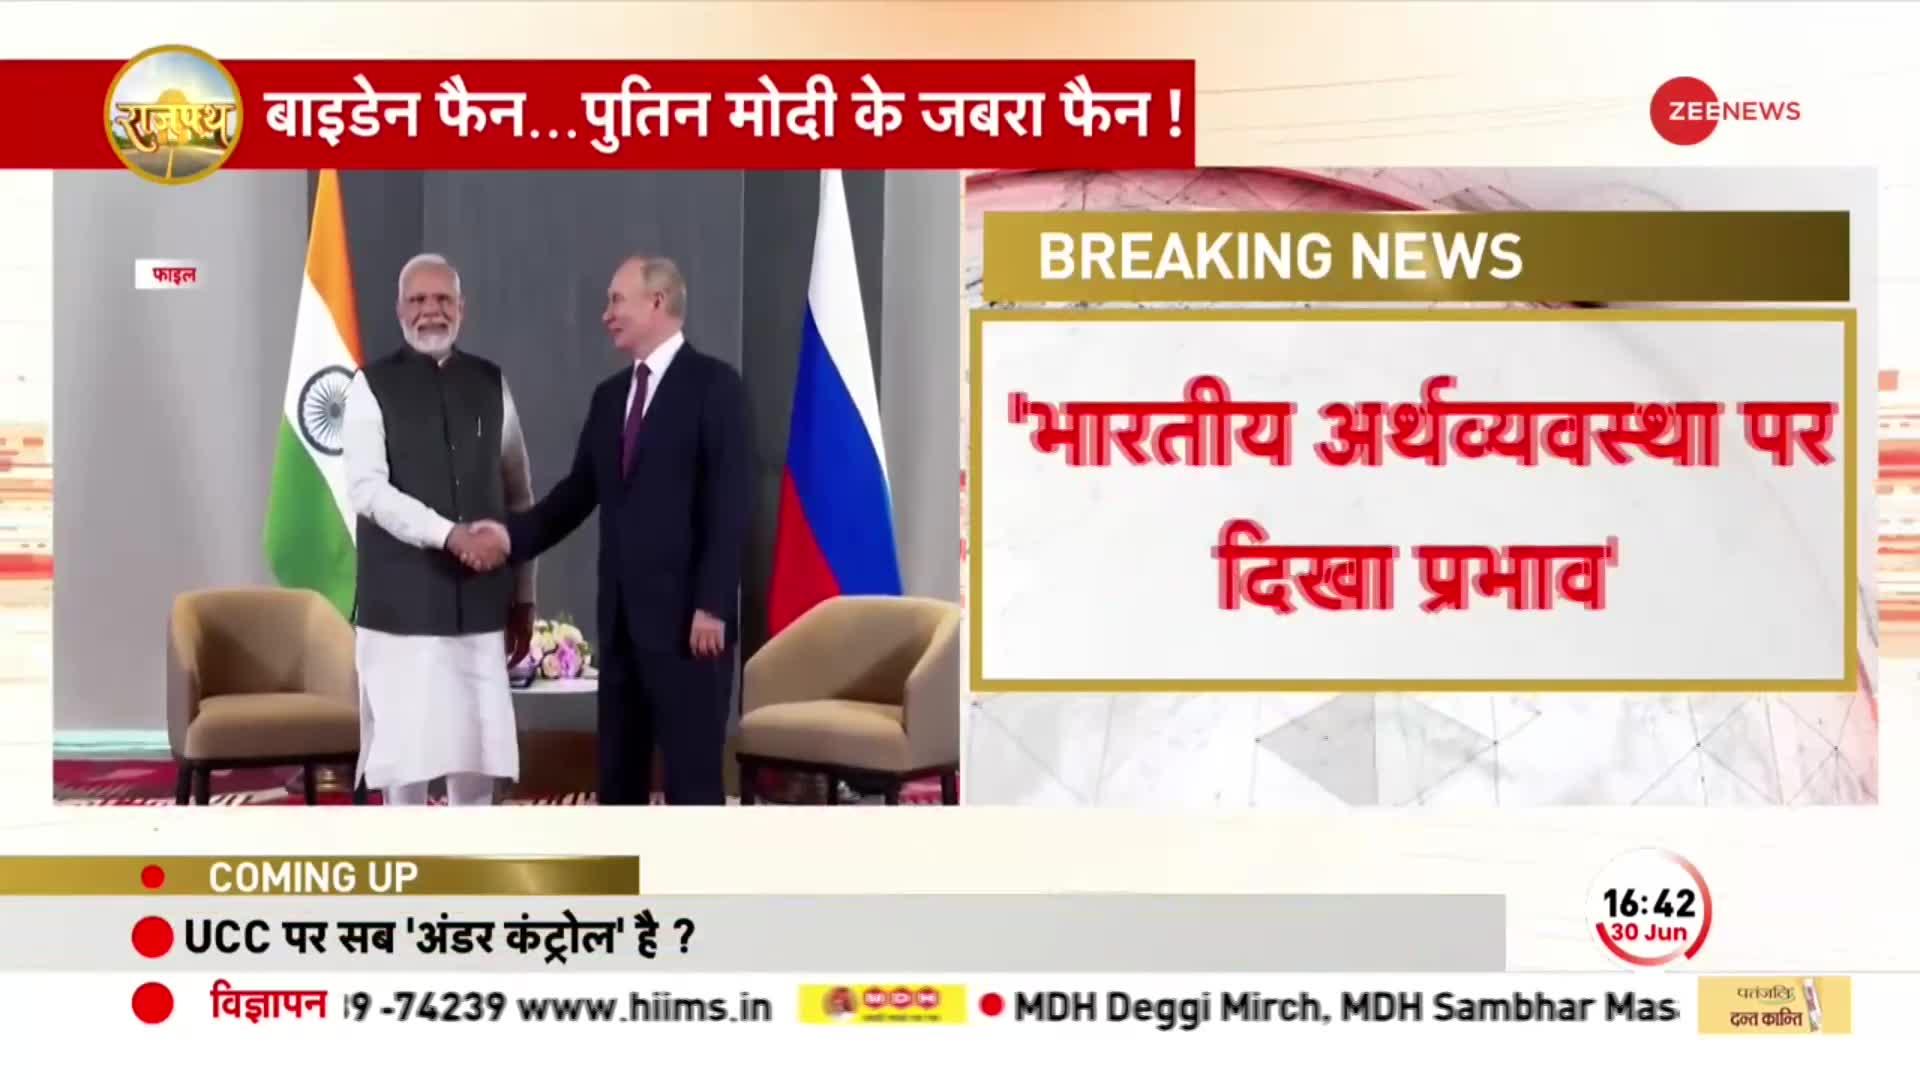 Putin on PM Modi: Russia के राष्ट्रपति Putin ने मोदी की तारीफ-पुतिन ने Make in India की तारीफ की